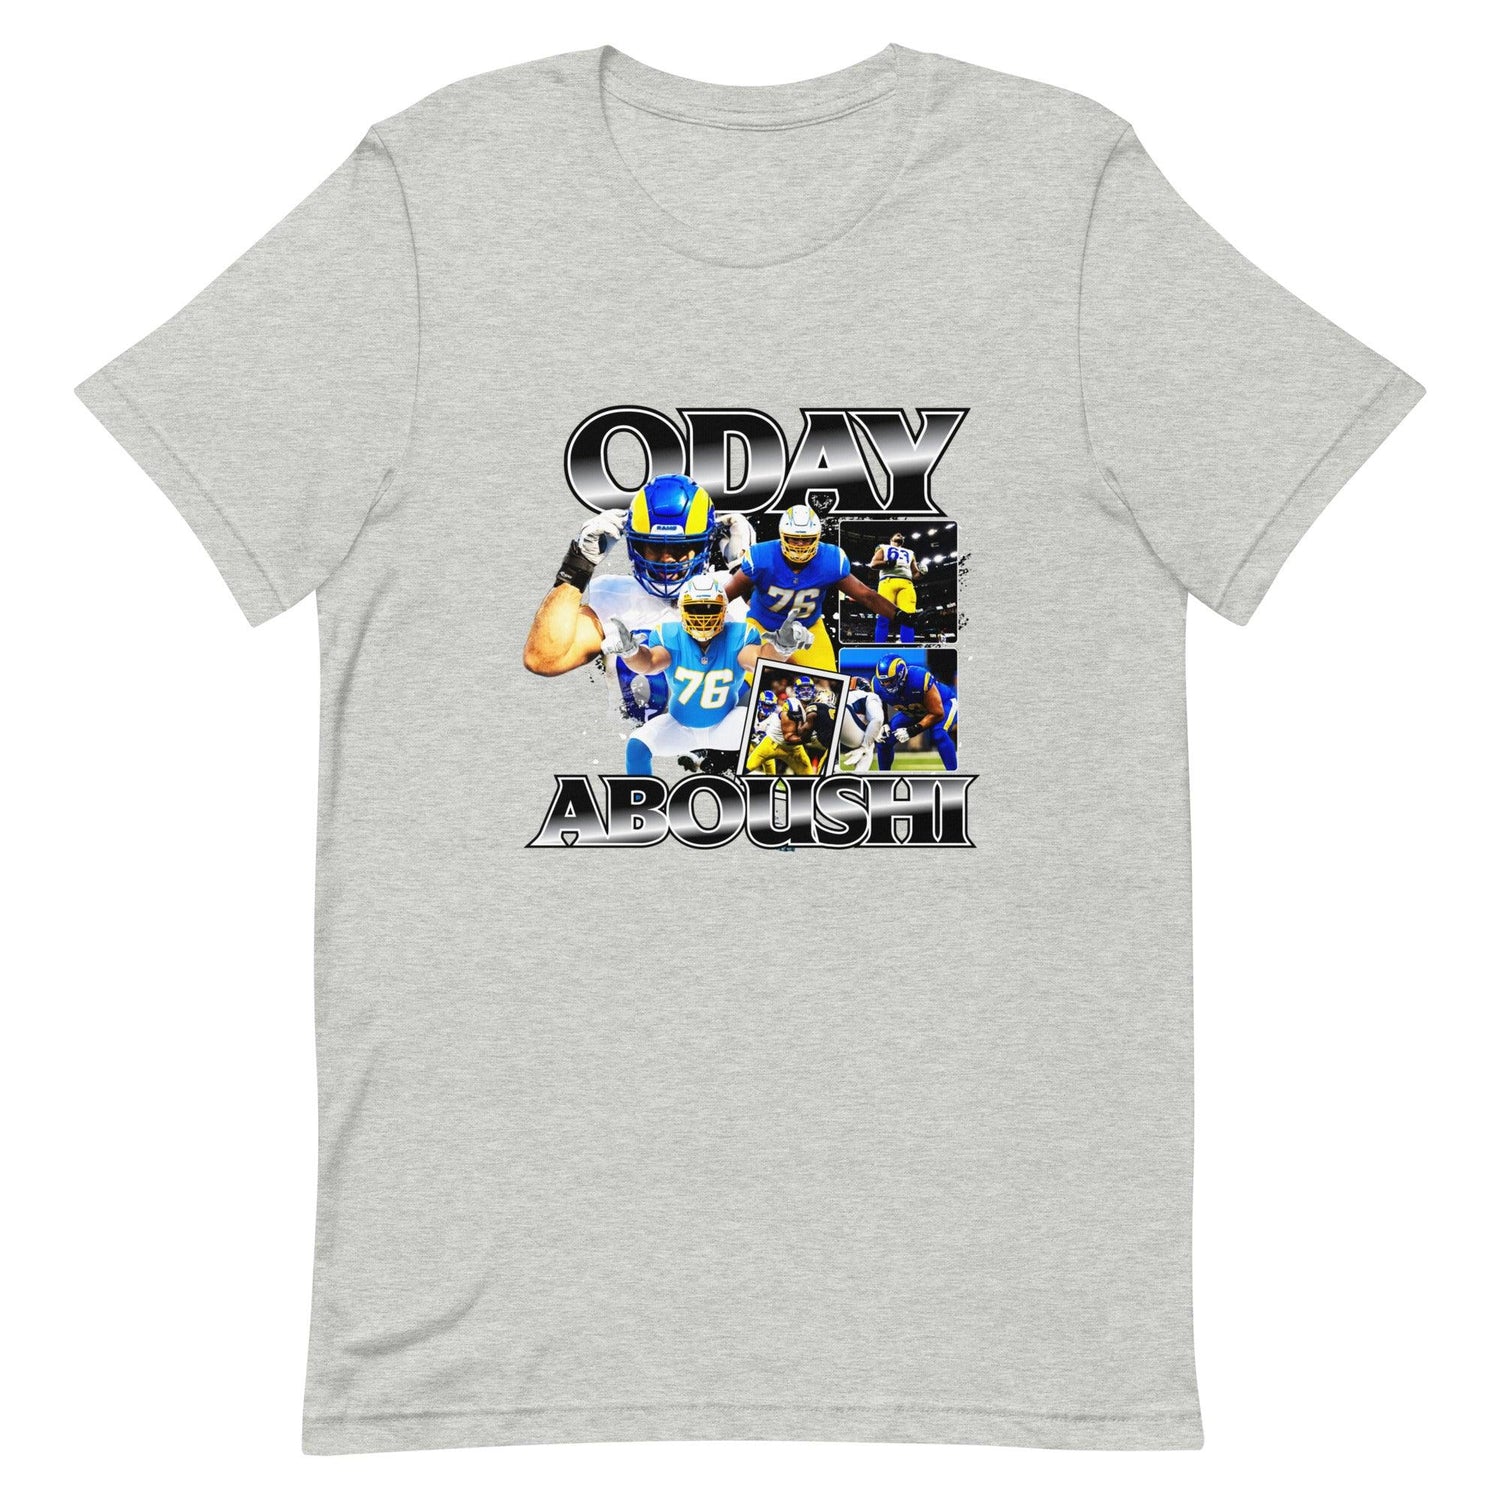 Oday Aboushi "Vintage" t-shirt - Fan Arch